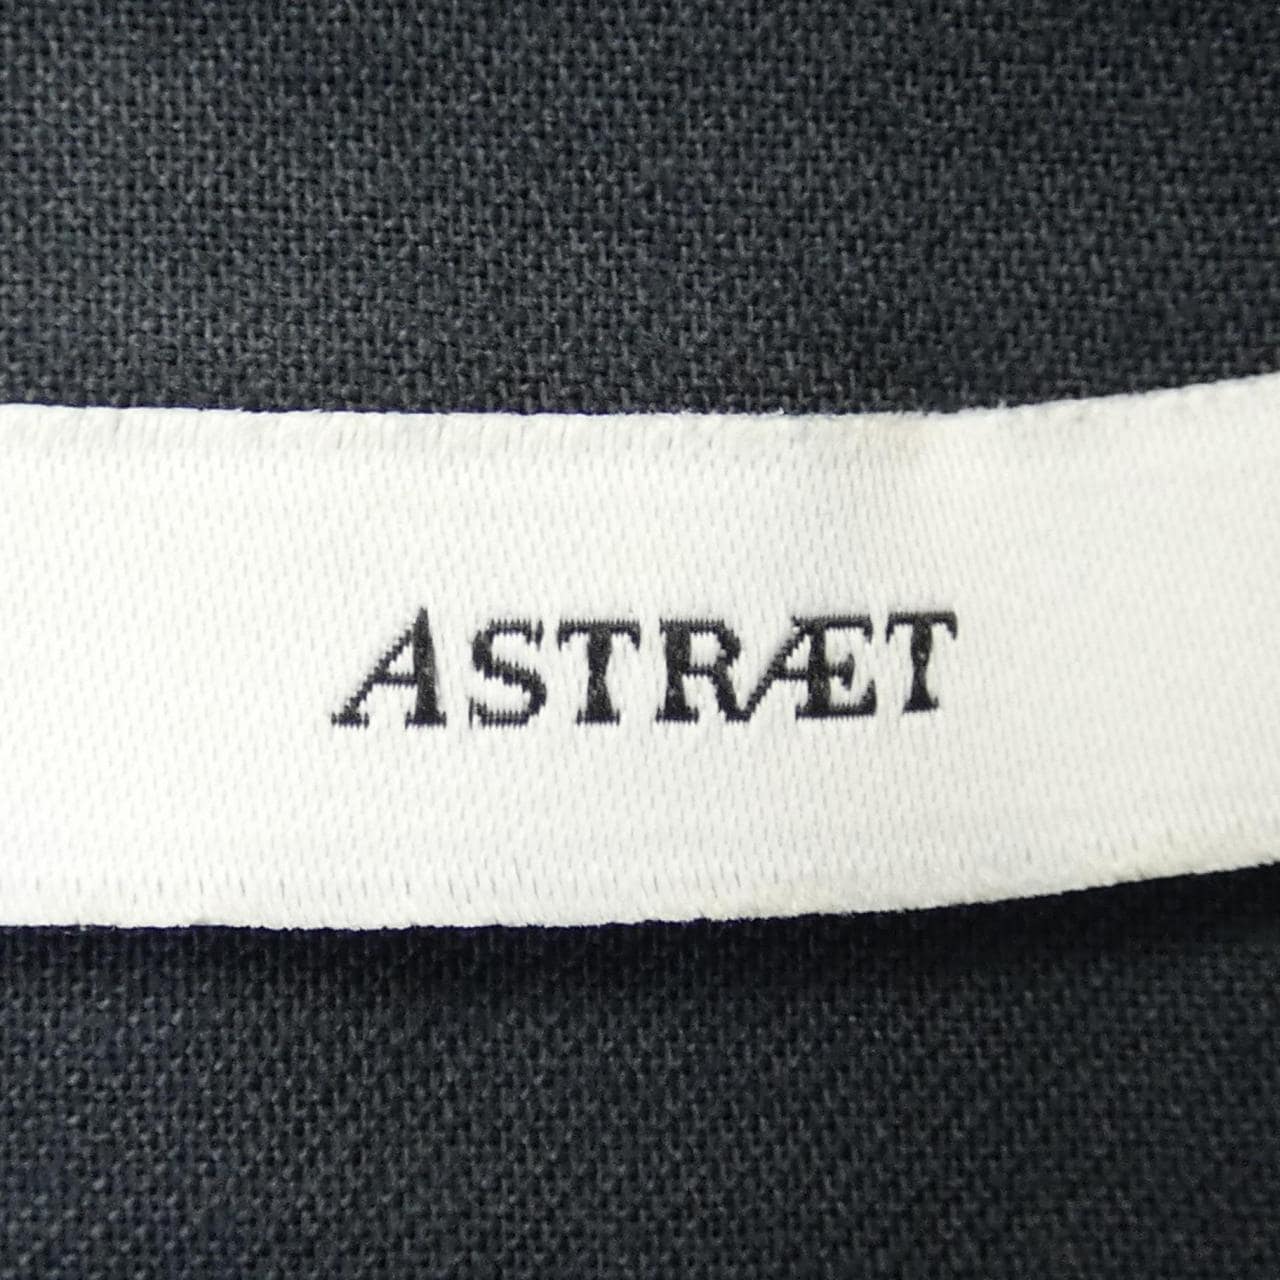 Astrat ASTRAET裤子